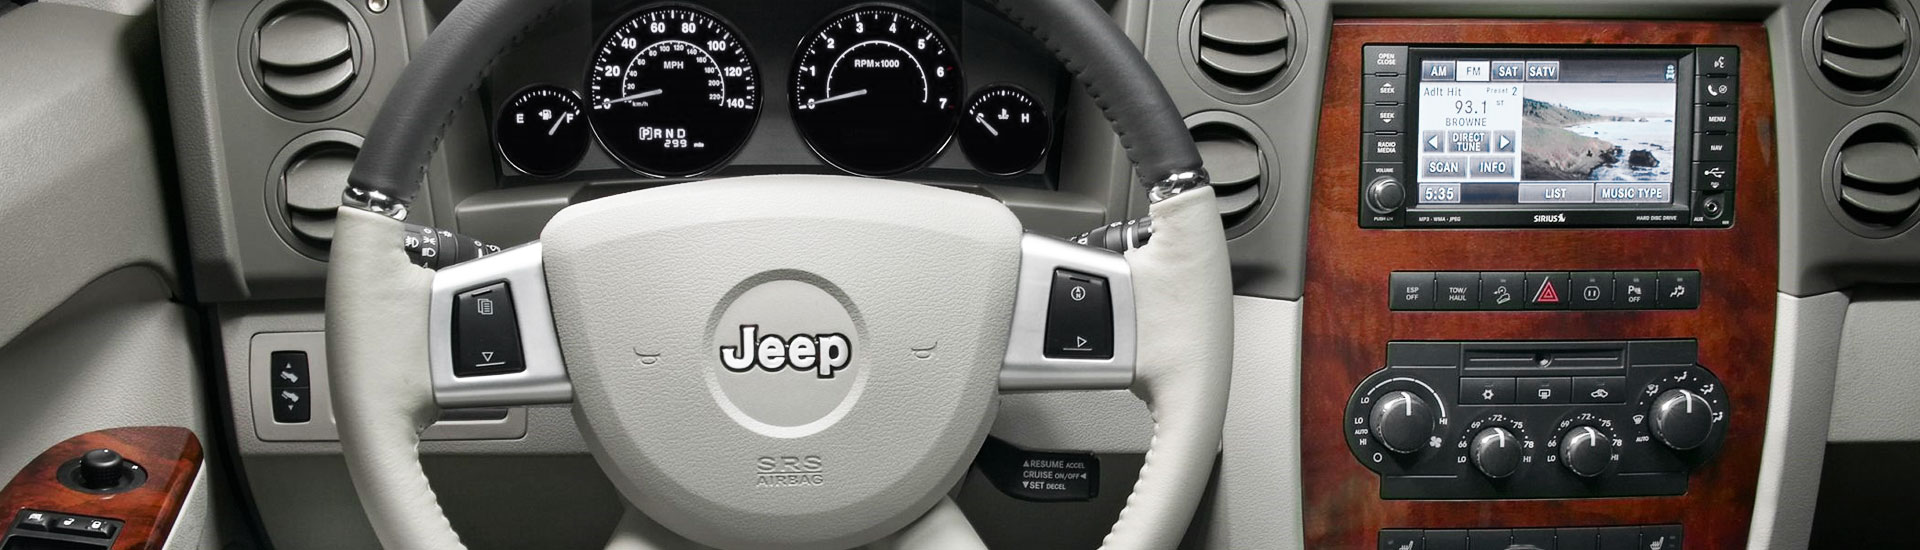 2016 Jeep Patriot Custom Dash Kits